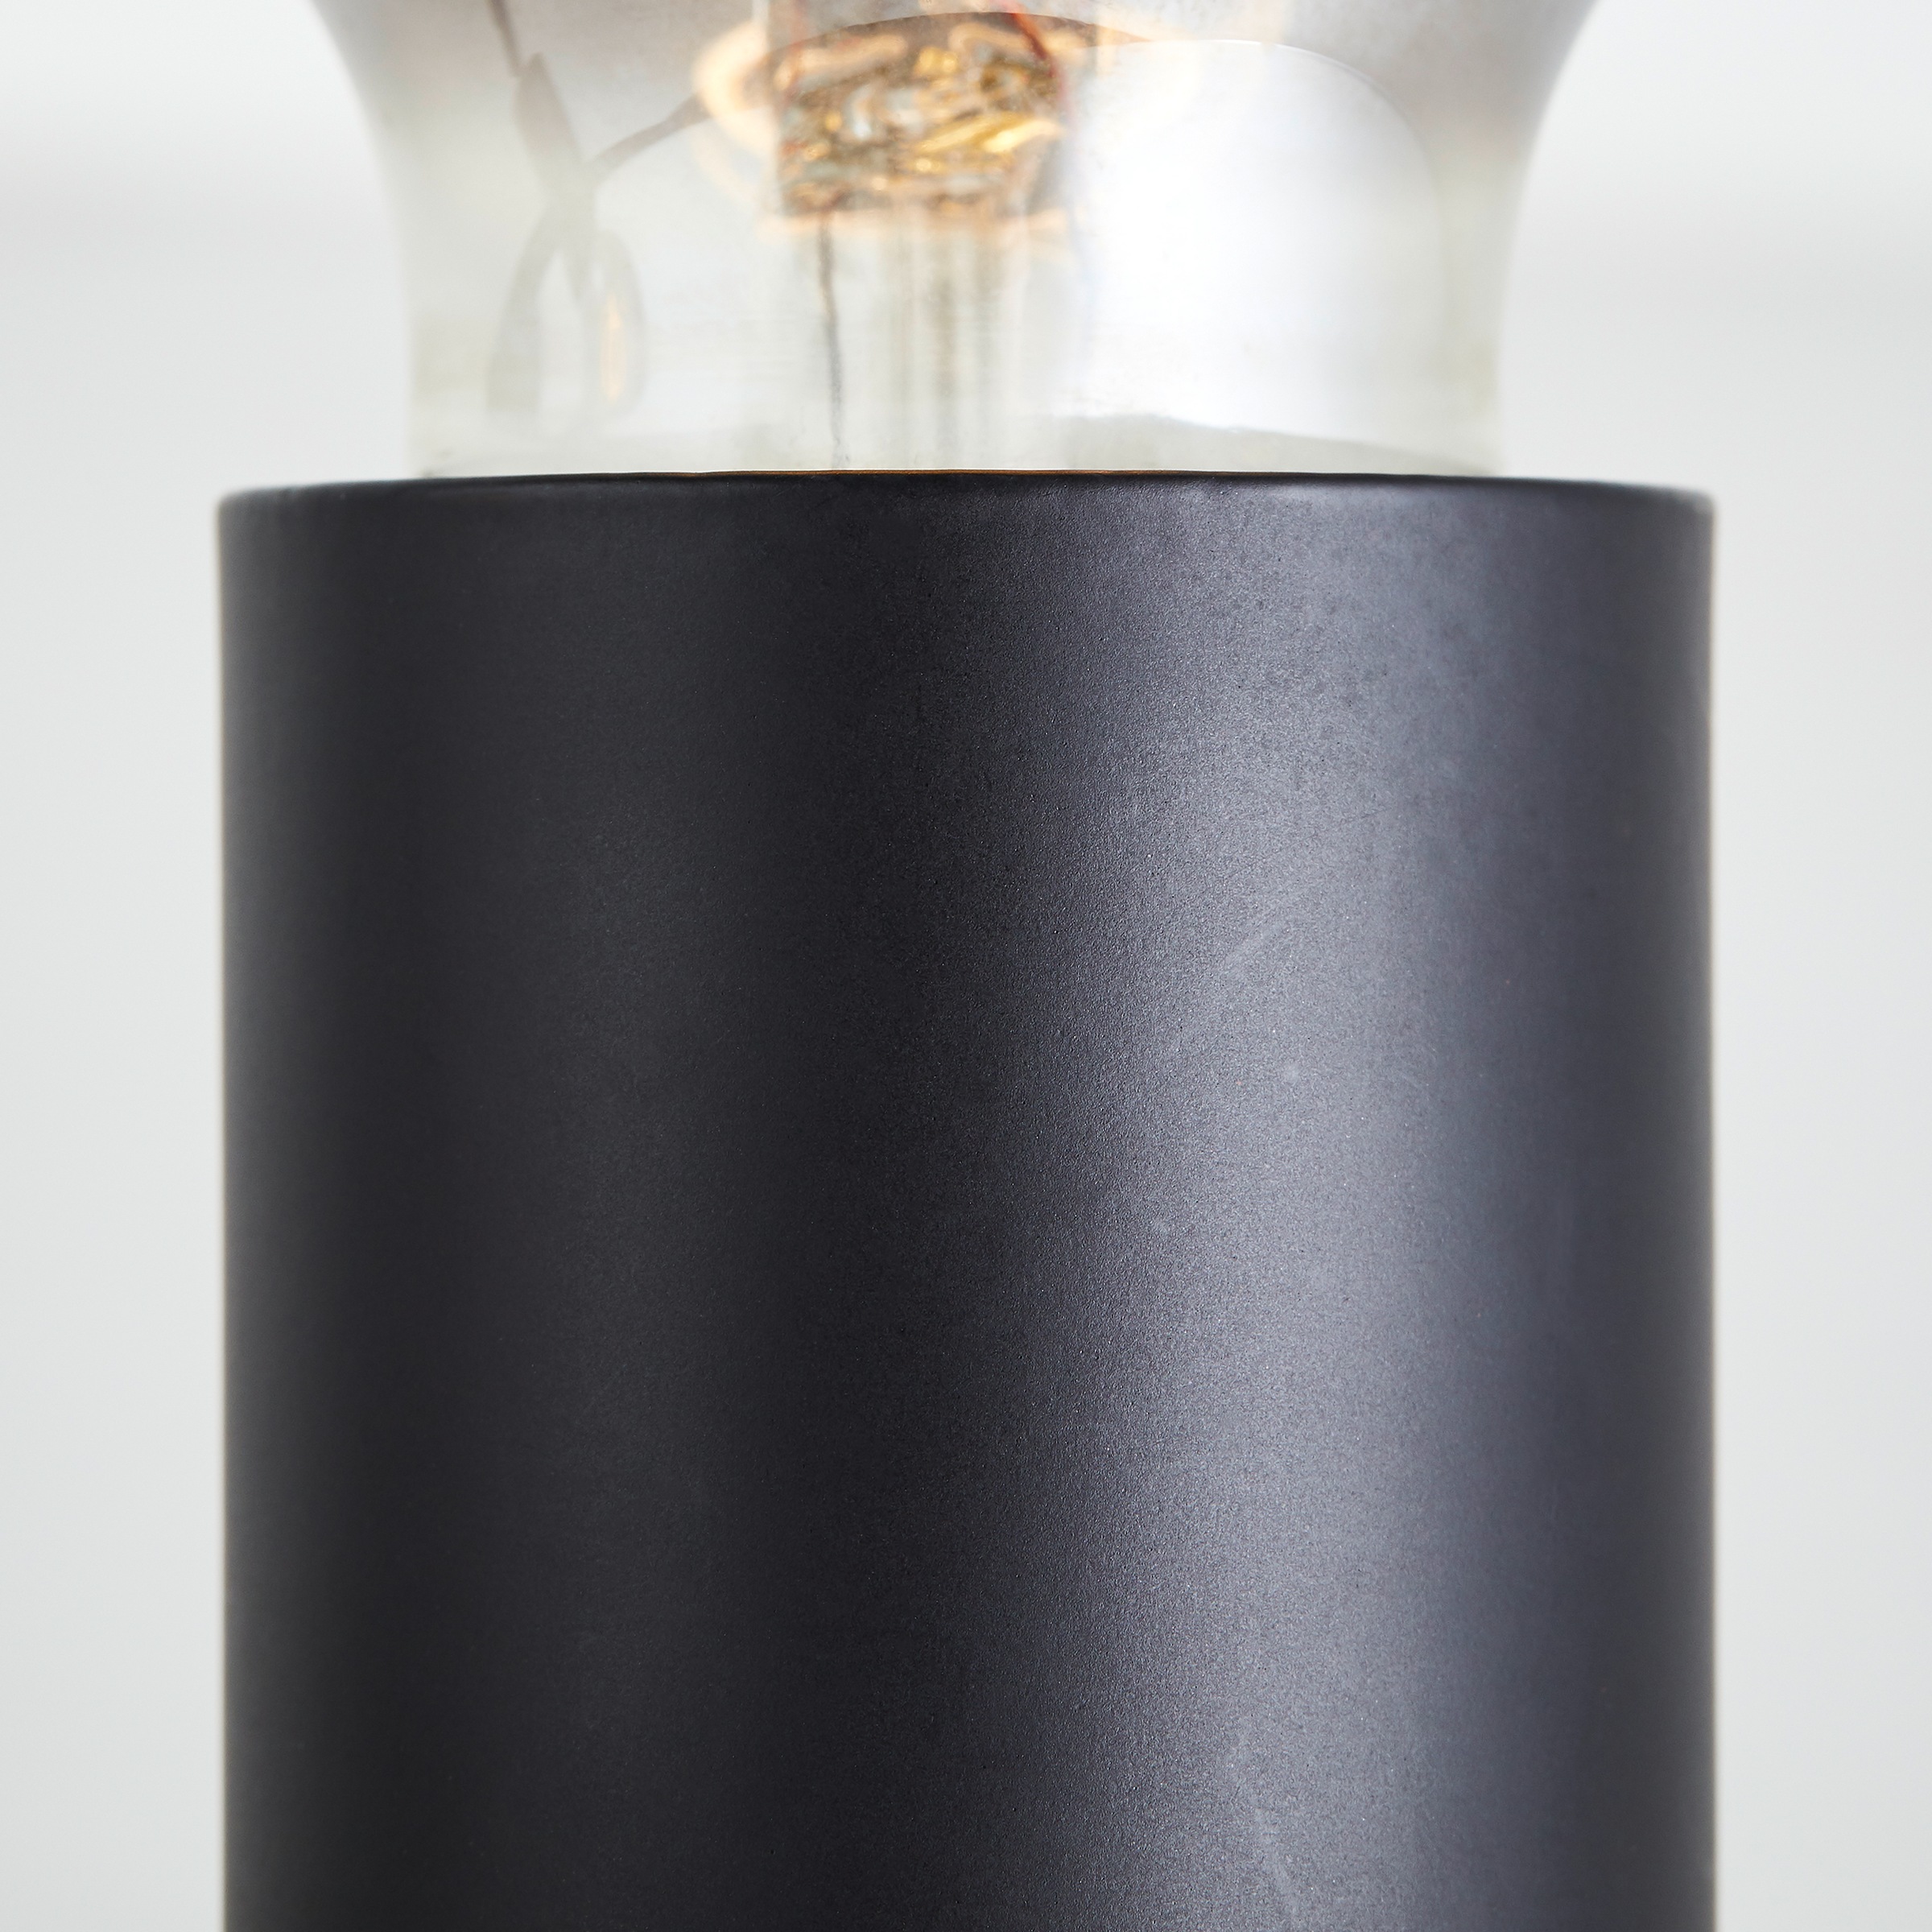 Brilliant Deckenstrahler »Tiffany«, 4 flammig, Leuchtmittel E27 | ohne Leuchtmittel, Deckenstrahler, 12 x 49 x 14 cm, E27, schwenkbar, Metall, matt schwarz